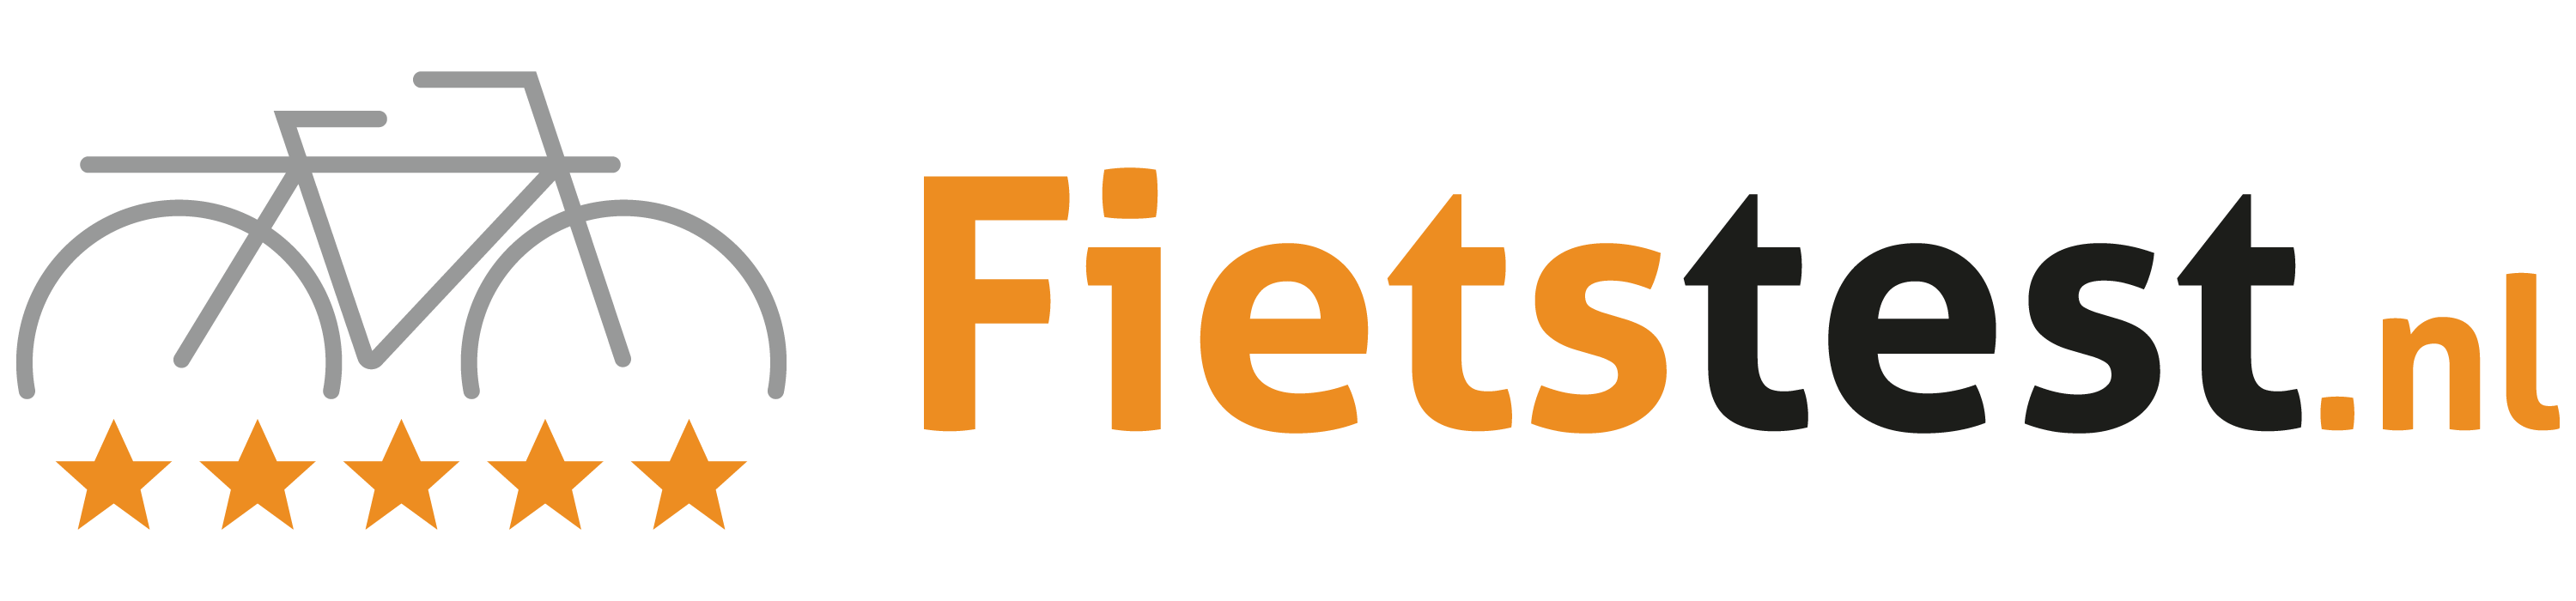 AD Fietstest logo